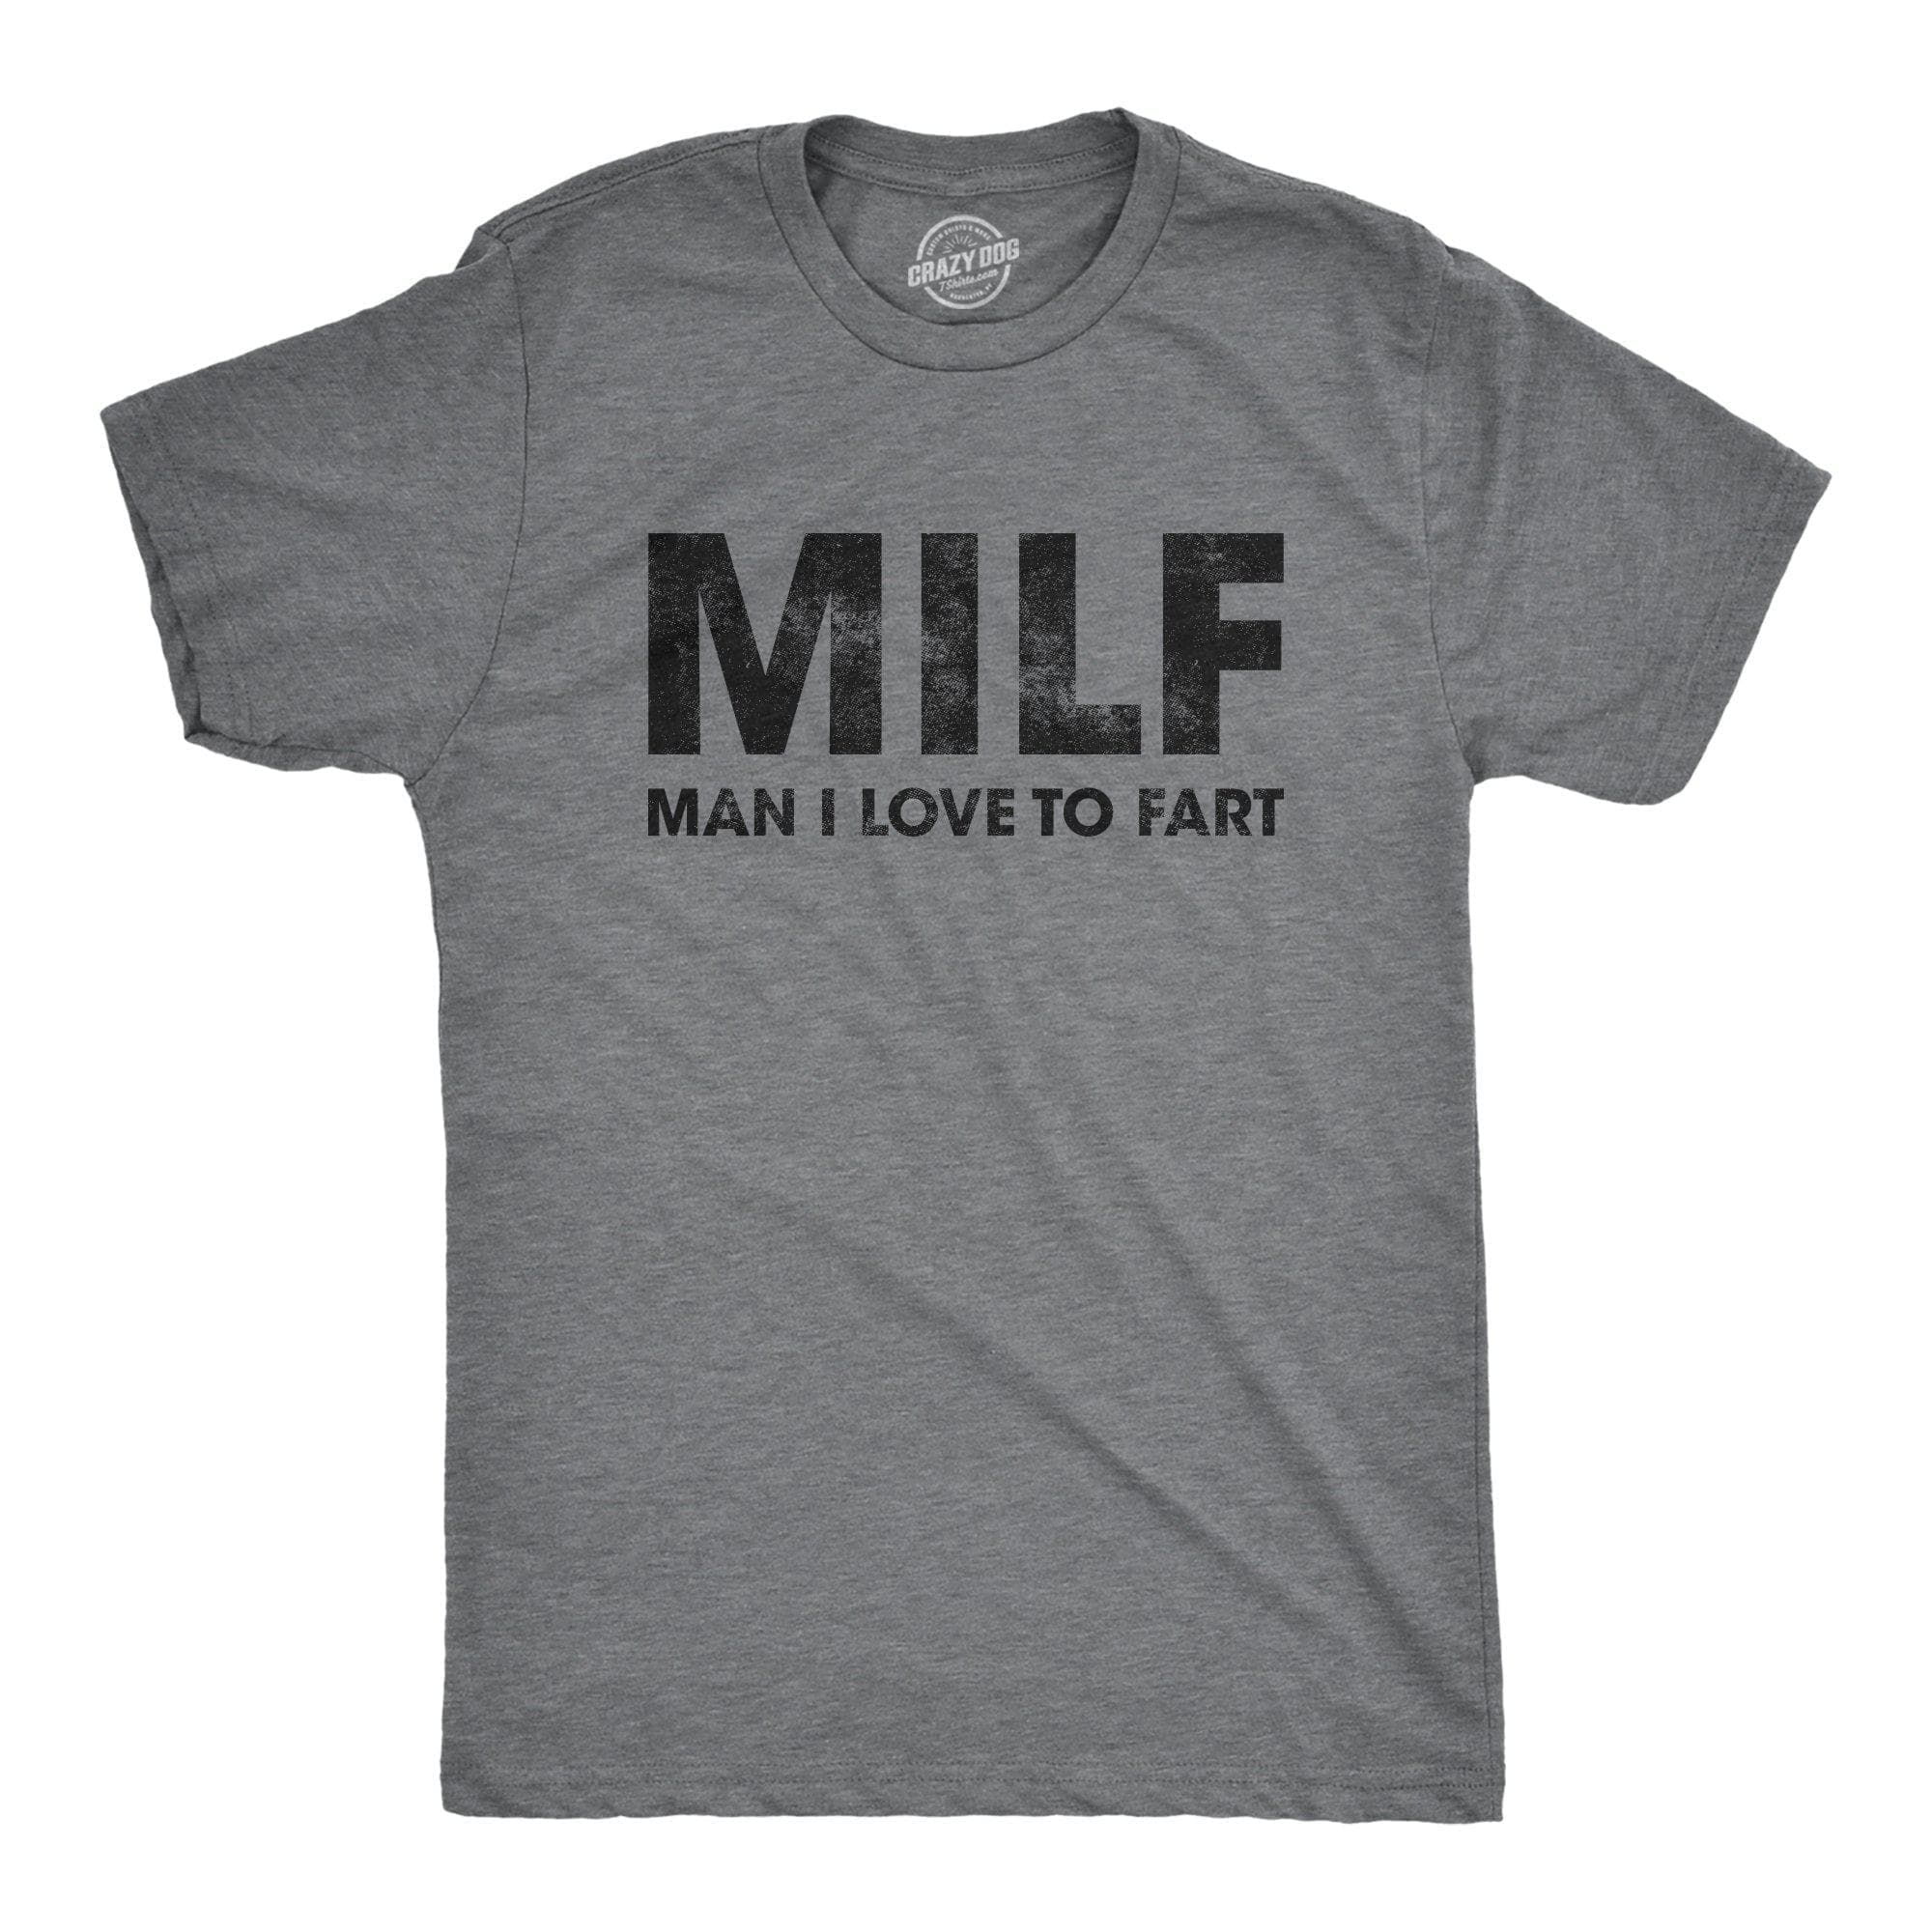 MILF Man I Love To Fart Men's Tshirt - Crazy Dog T-Shirts